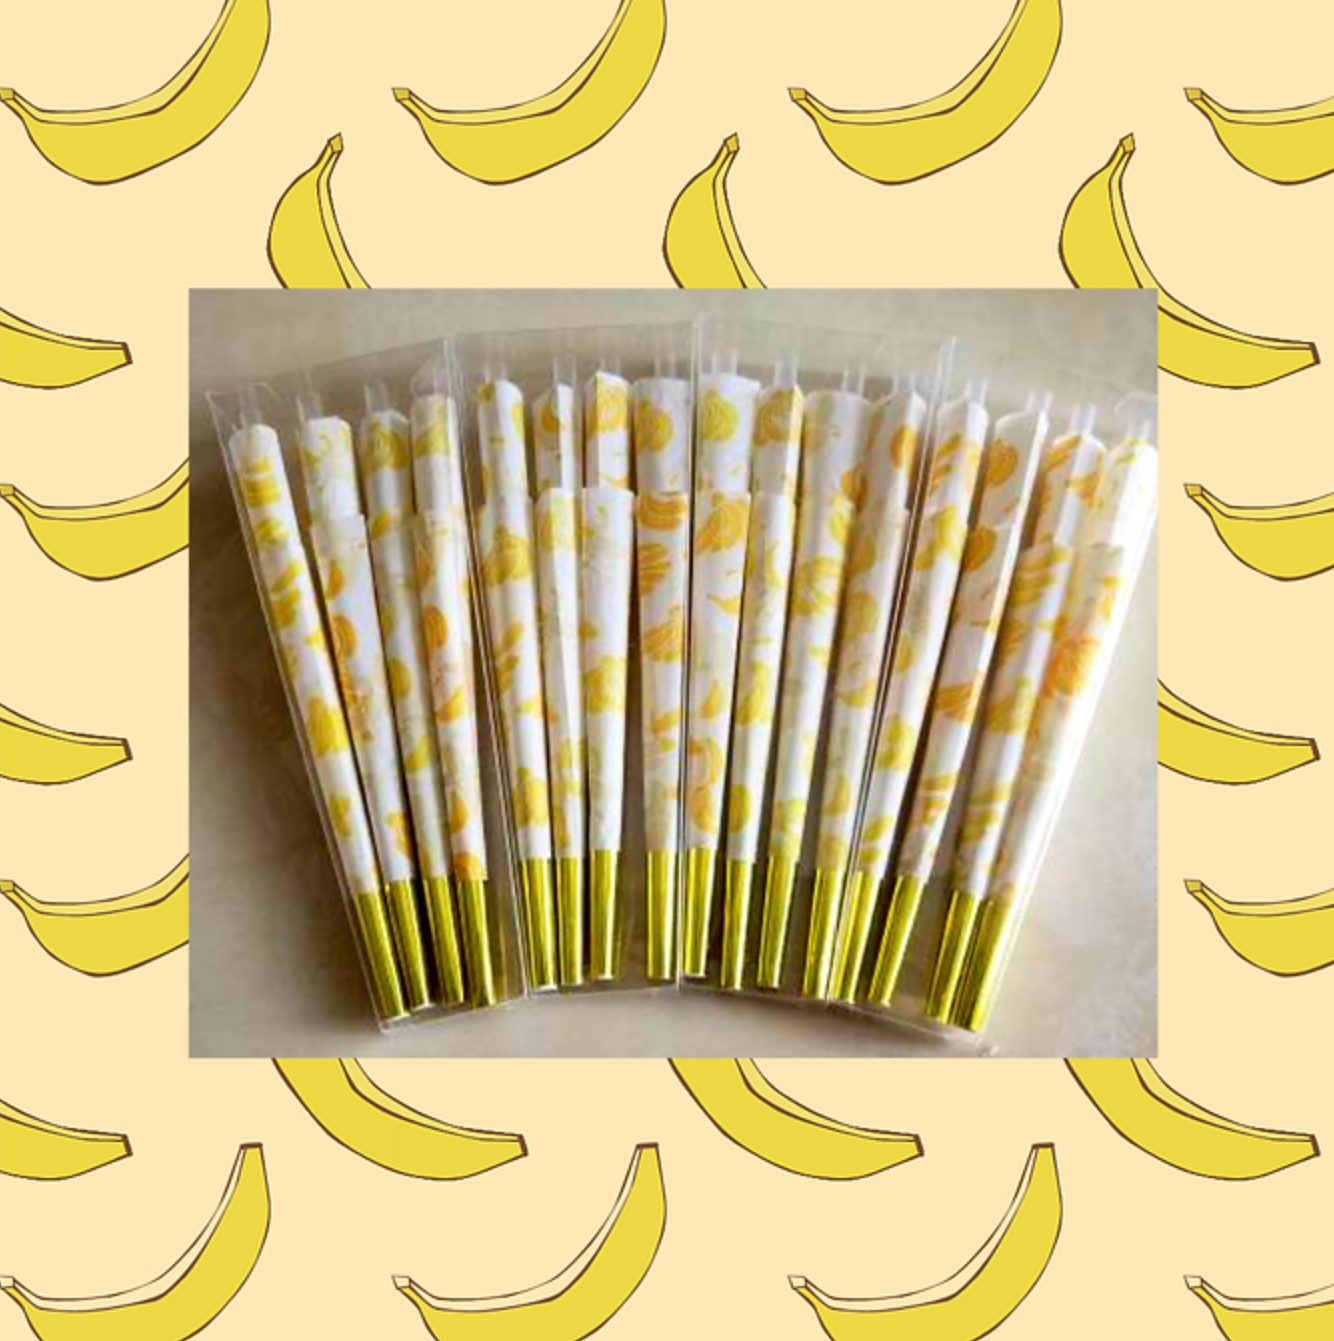 banana flavored cones